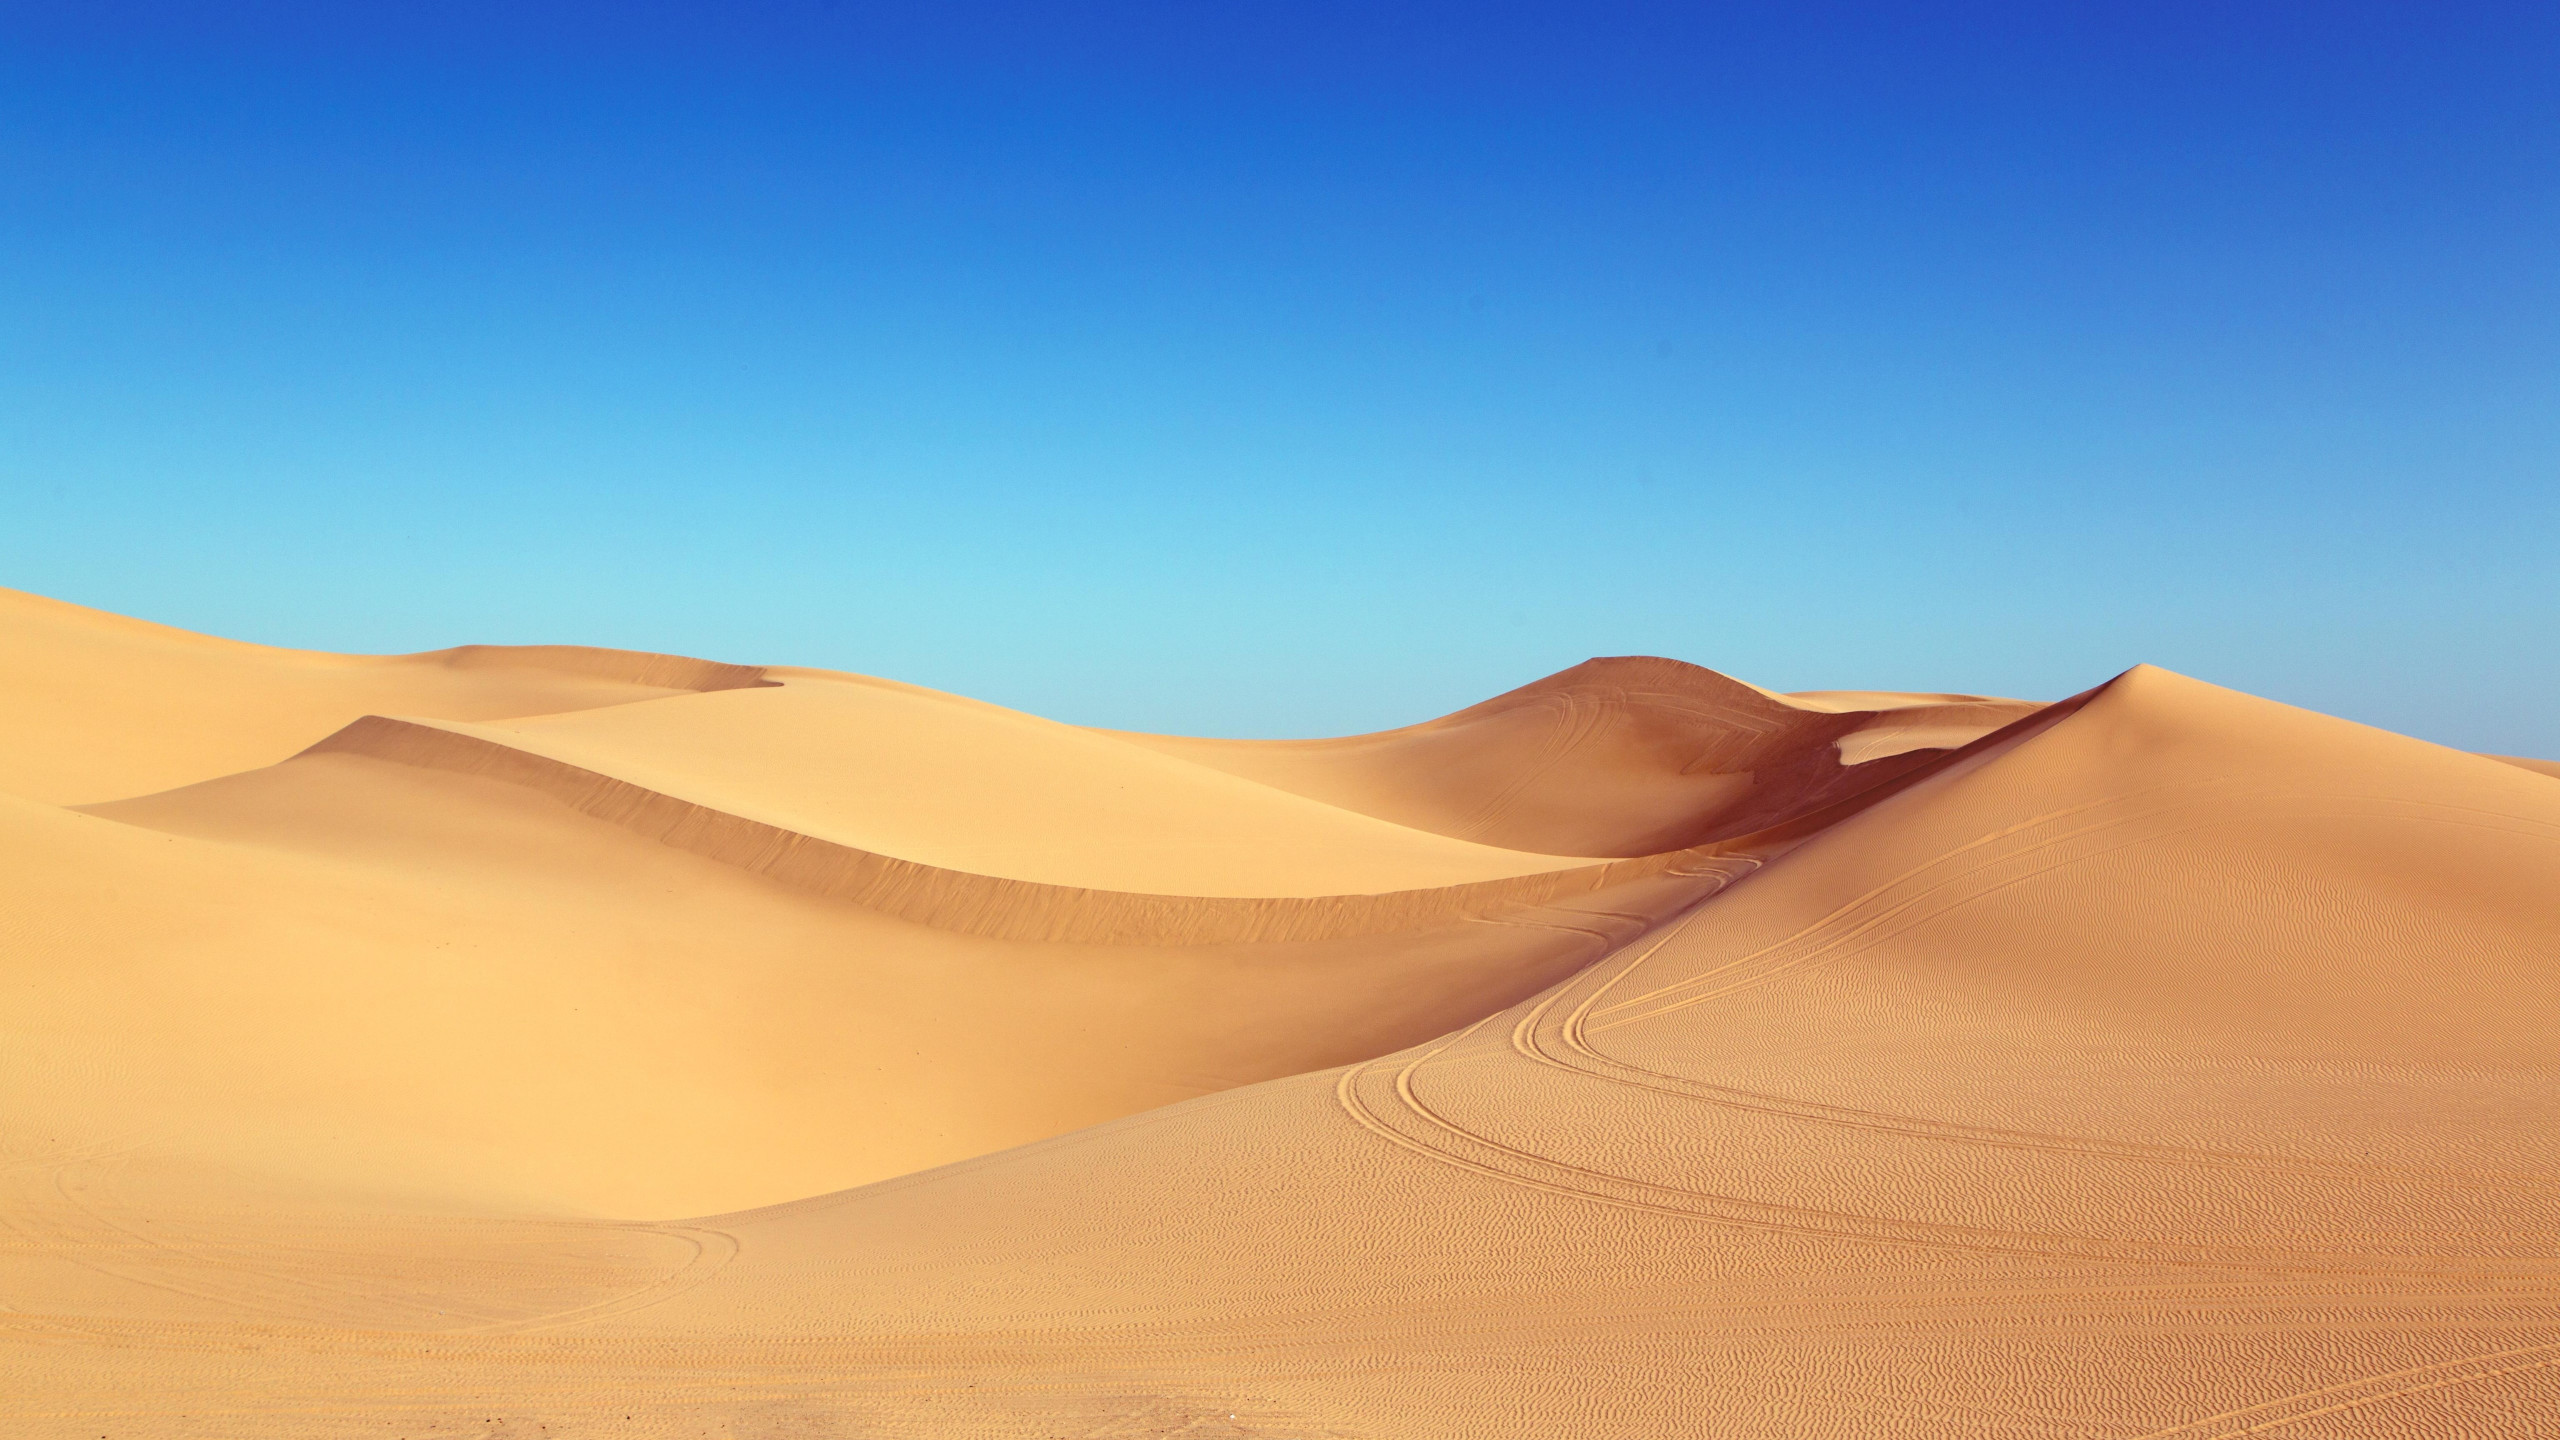 Blue sky and desert dunes wallpaper 2560x1440